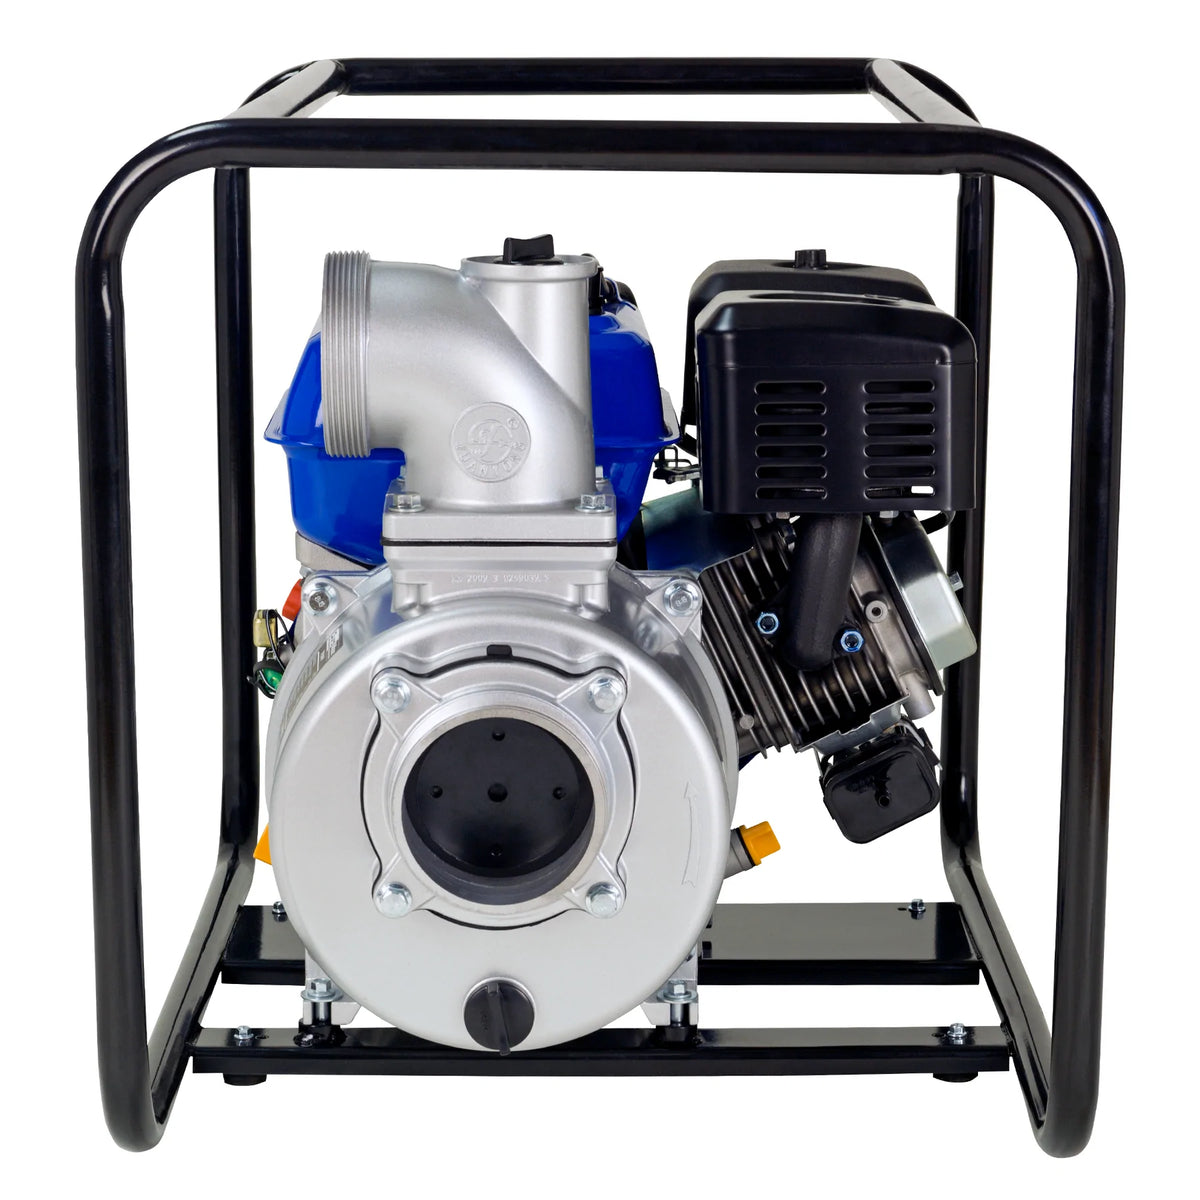 DuroMax XP904WP 270cc 427-Gpm 4&quot; Gas Powered Portable Semi-Trash Water Pump